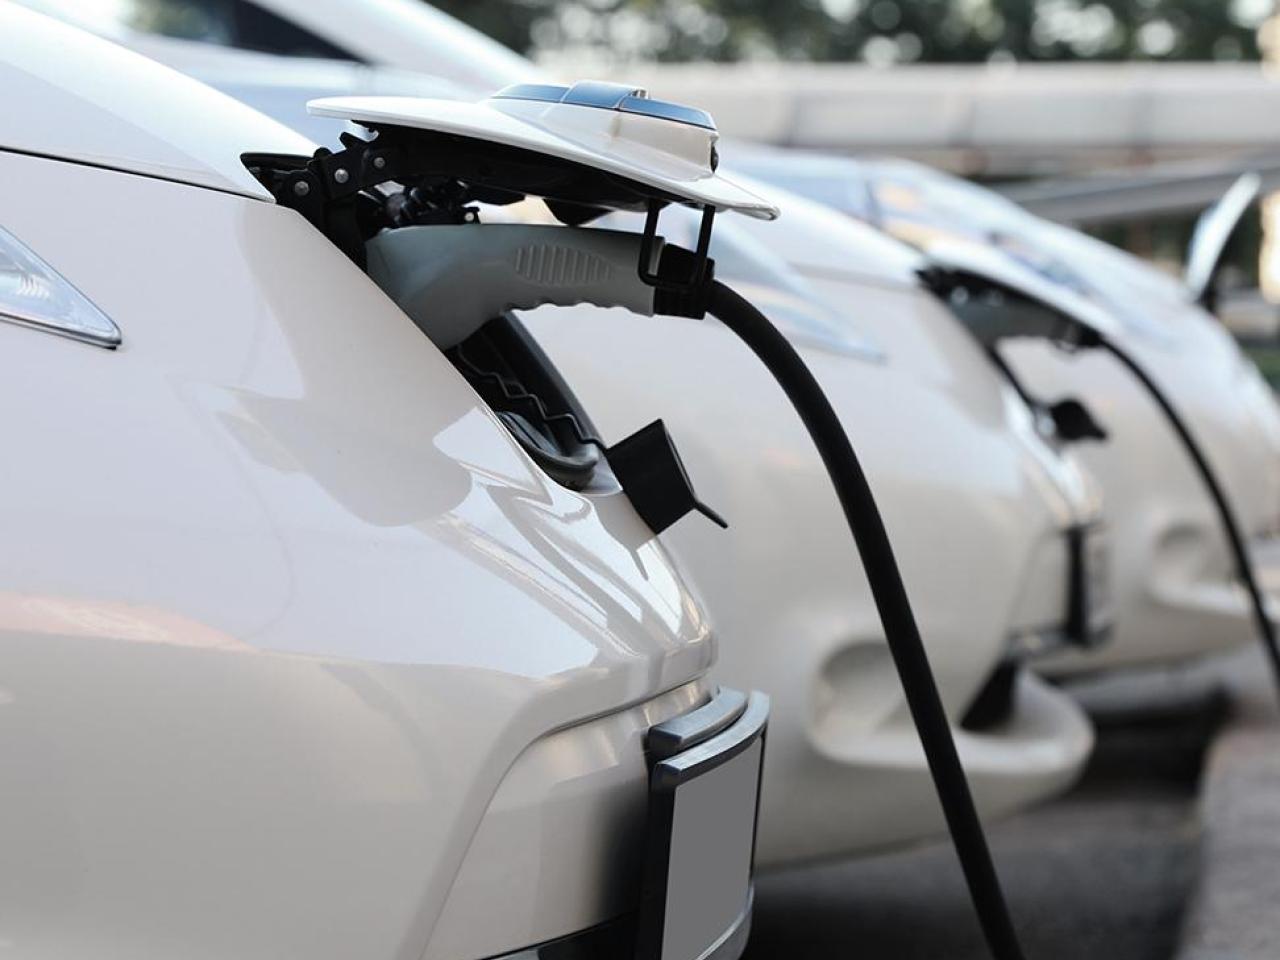 EV cars charging